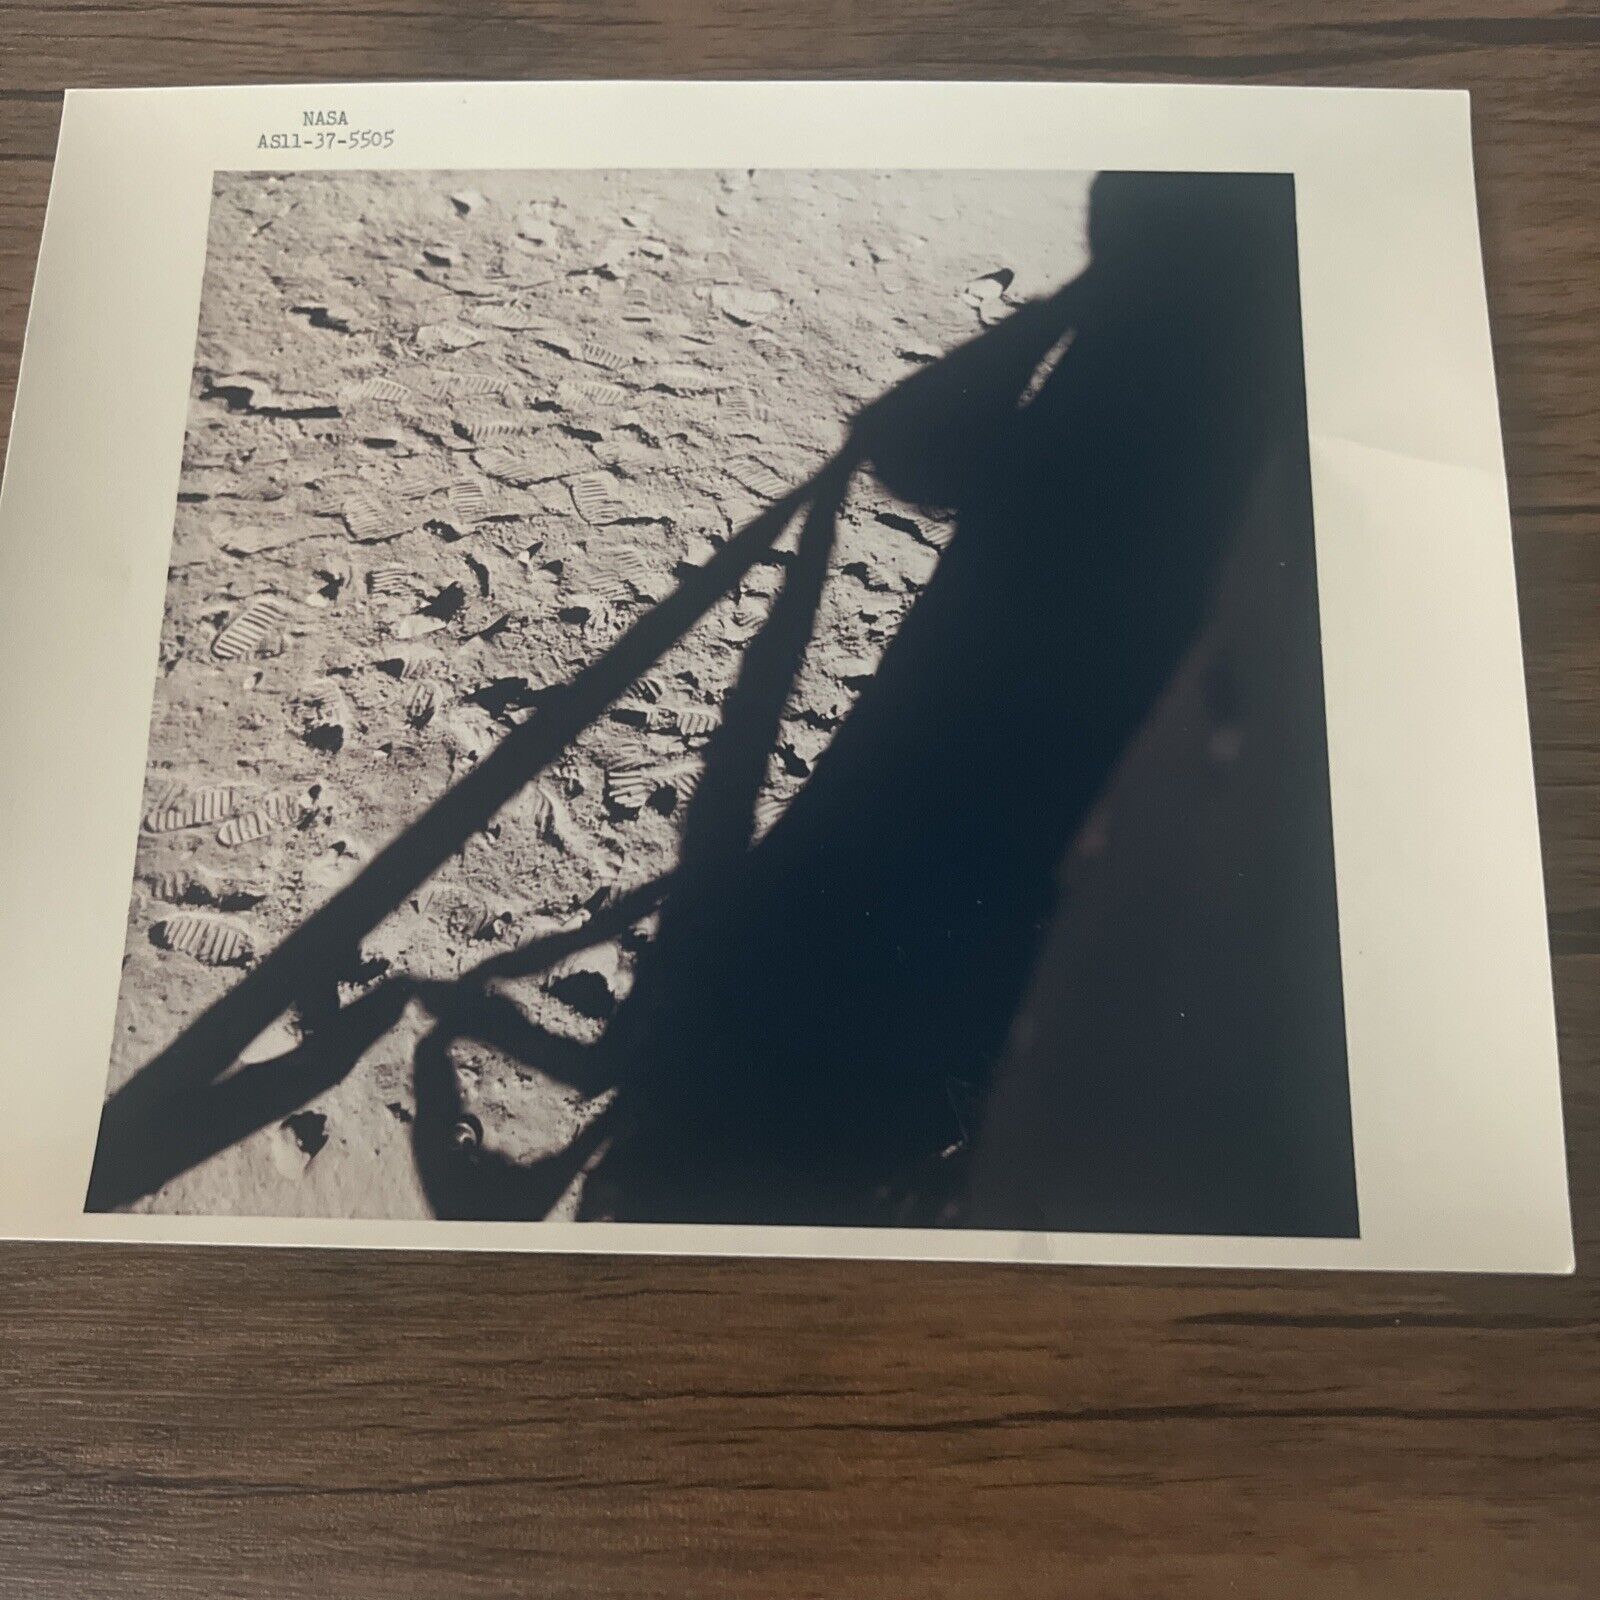 NASA Photograph On Kodak Paper AS11-37-5505